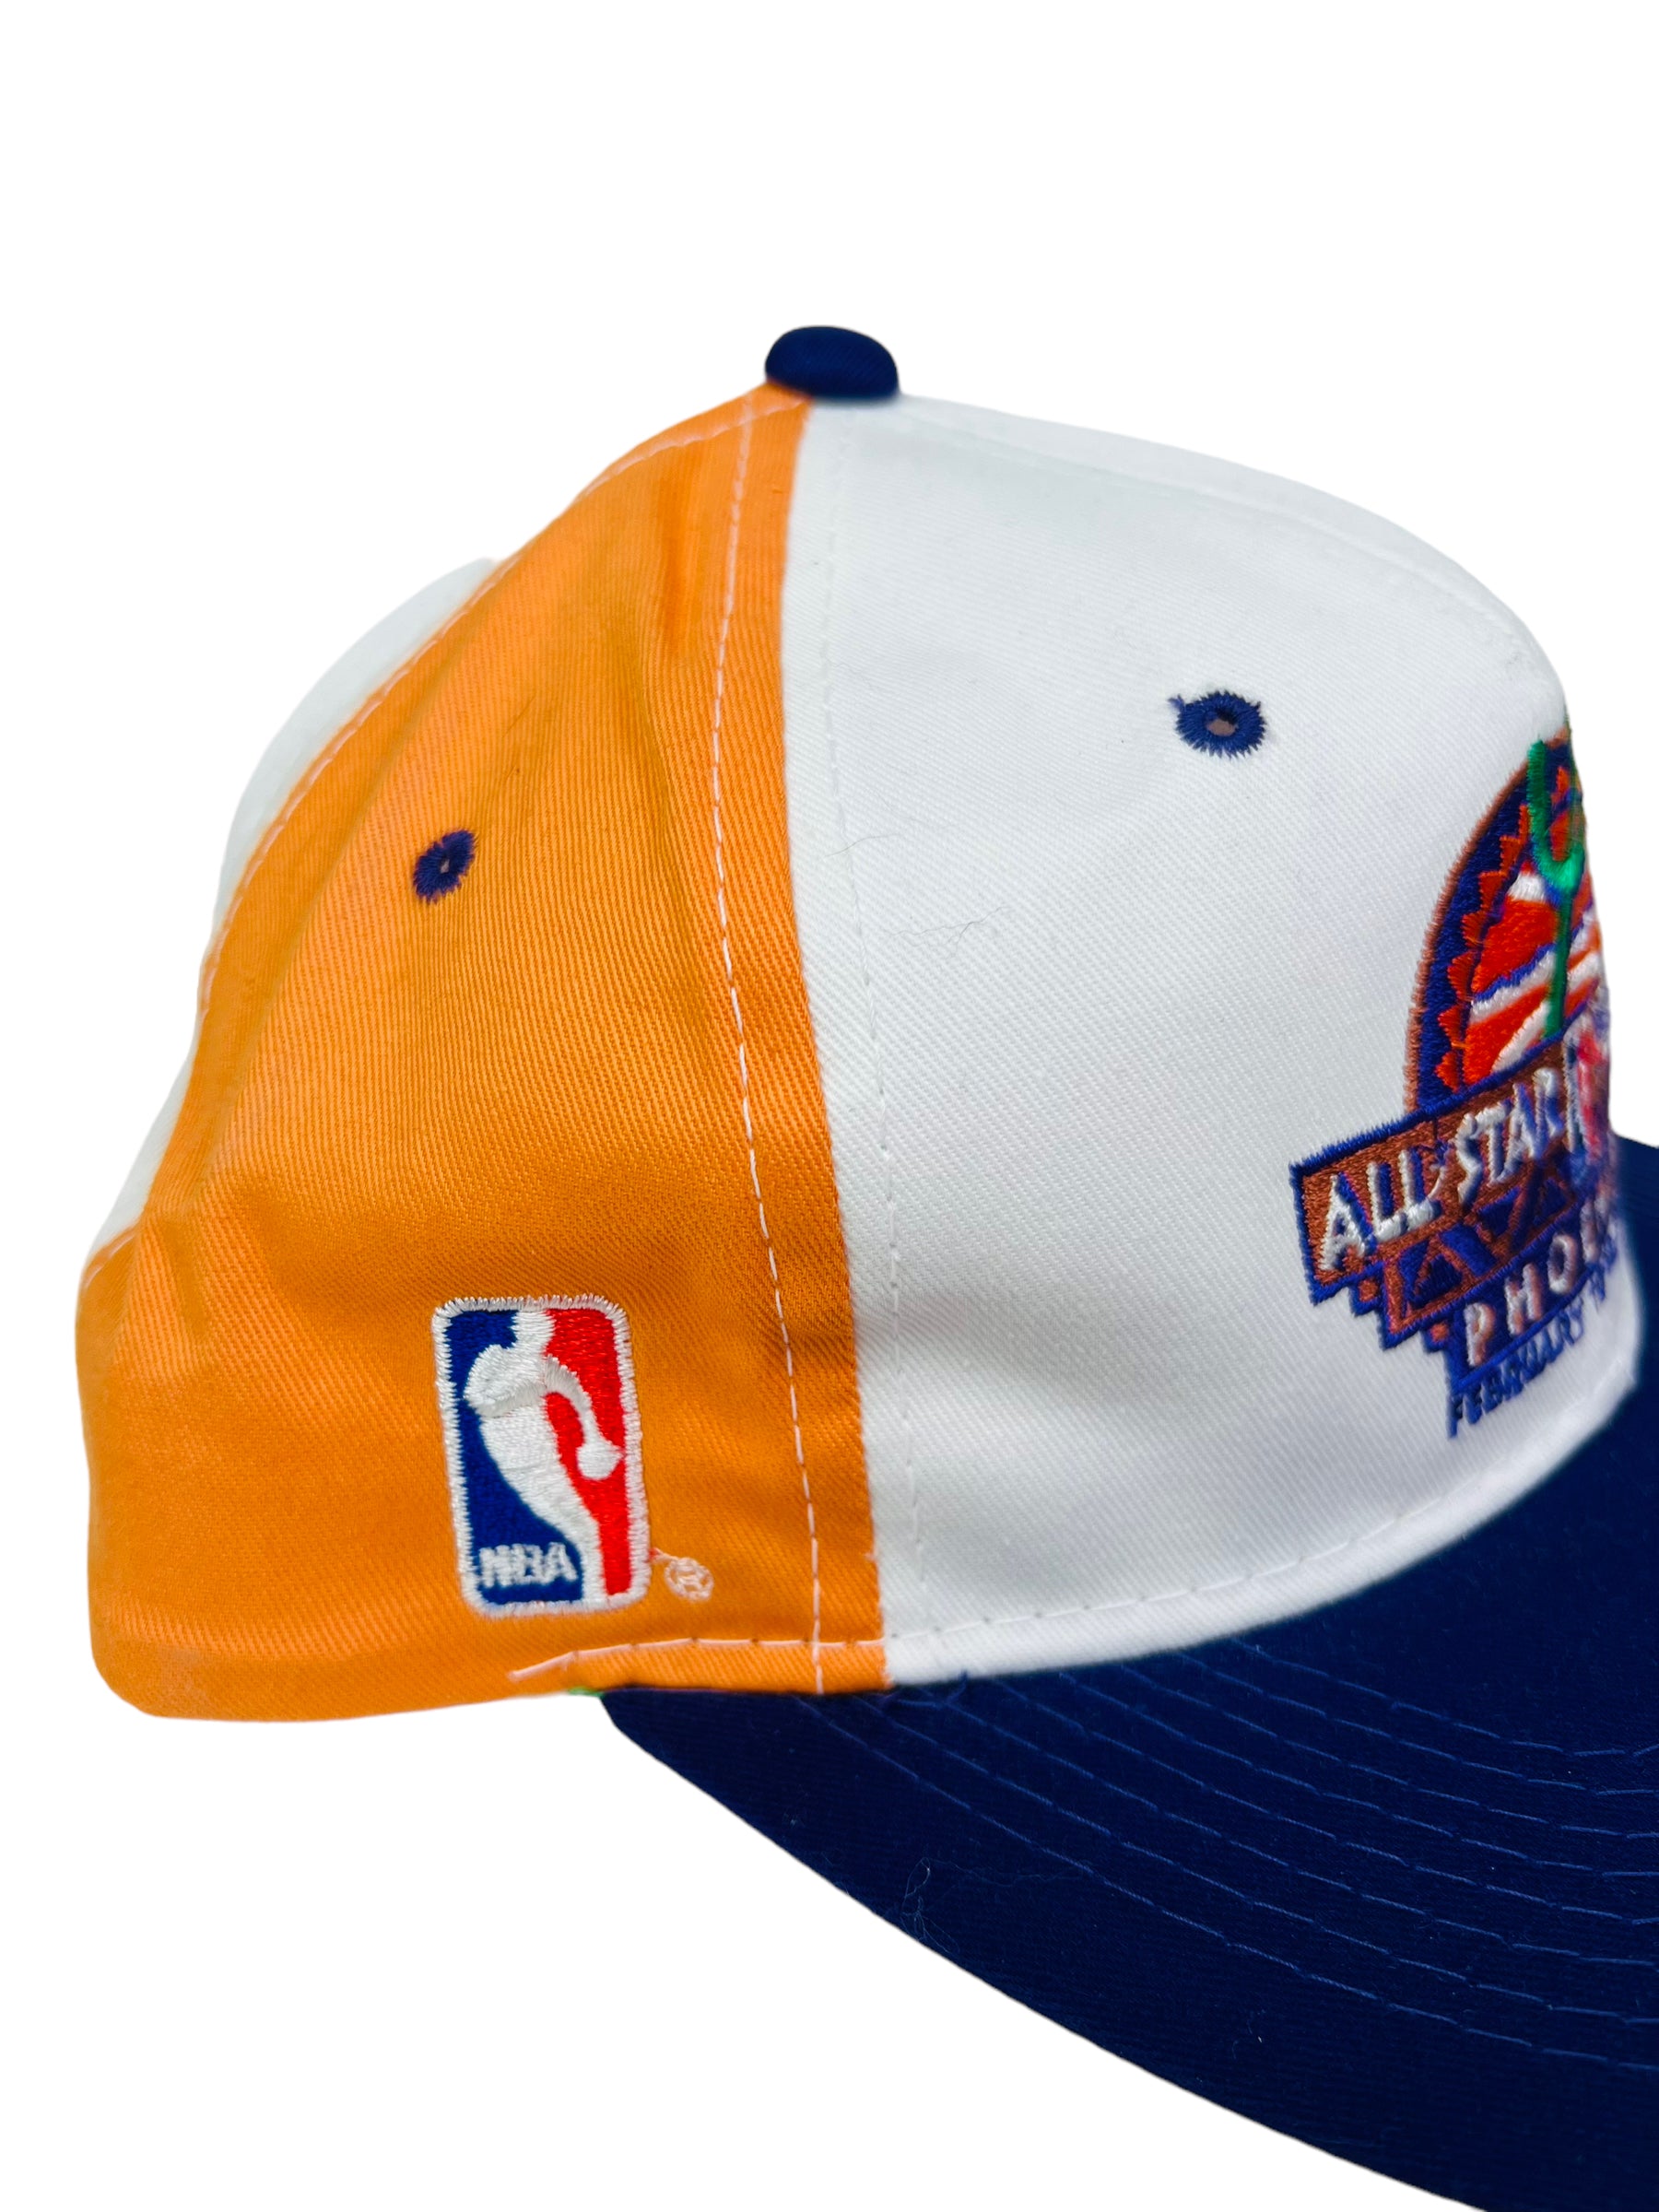 NBA ALL-STAR GAME VINTAGE 1995 SPORTS SPECIALTIES SNAPBACK ADULT HAT -  Bucks County Baseball Co.